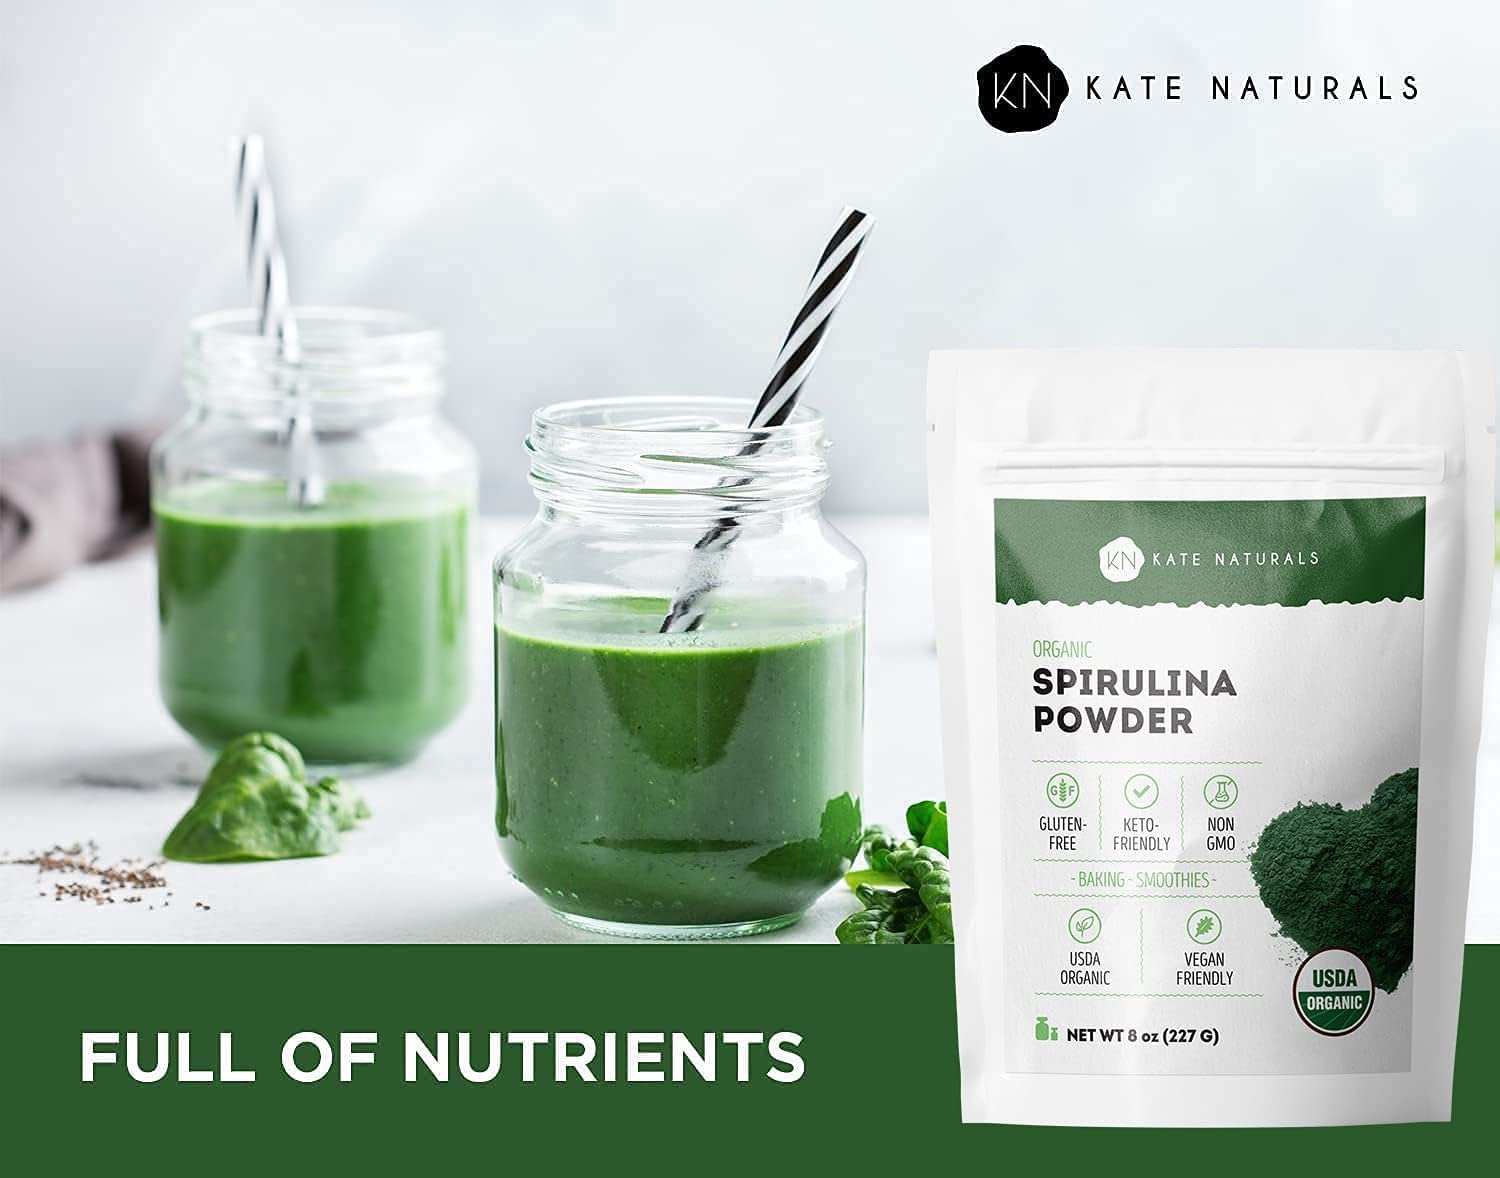 Kate Naturals Organic Spirulina Powder (8 oz) for Immune Support and Antioxidants USDA Certified. Natural. Non-GMO. Gluten-Free. Nutrient Dense Superfood Supplement